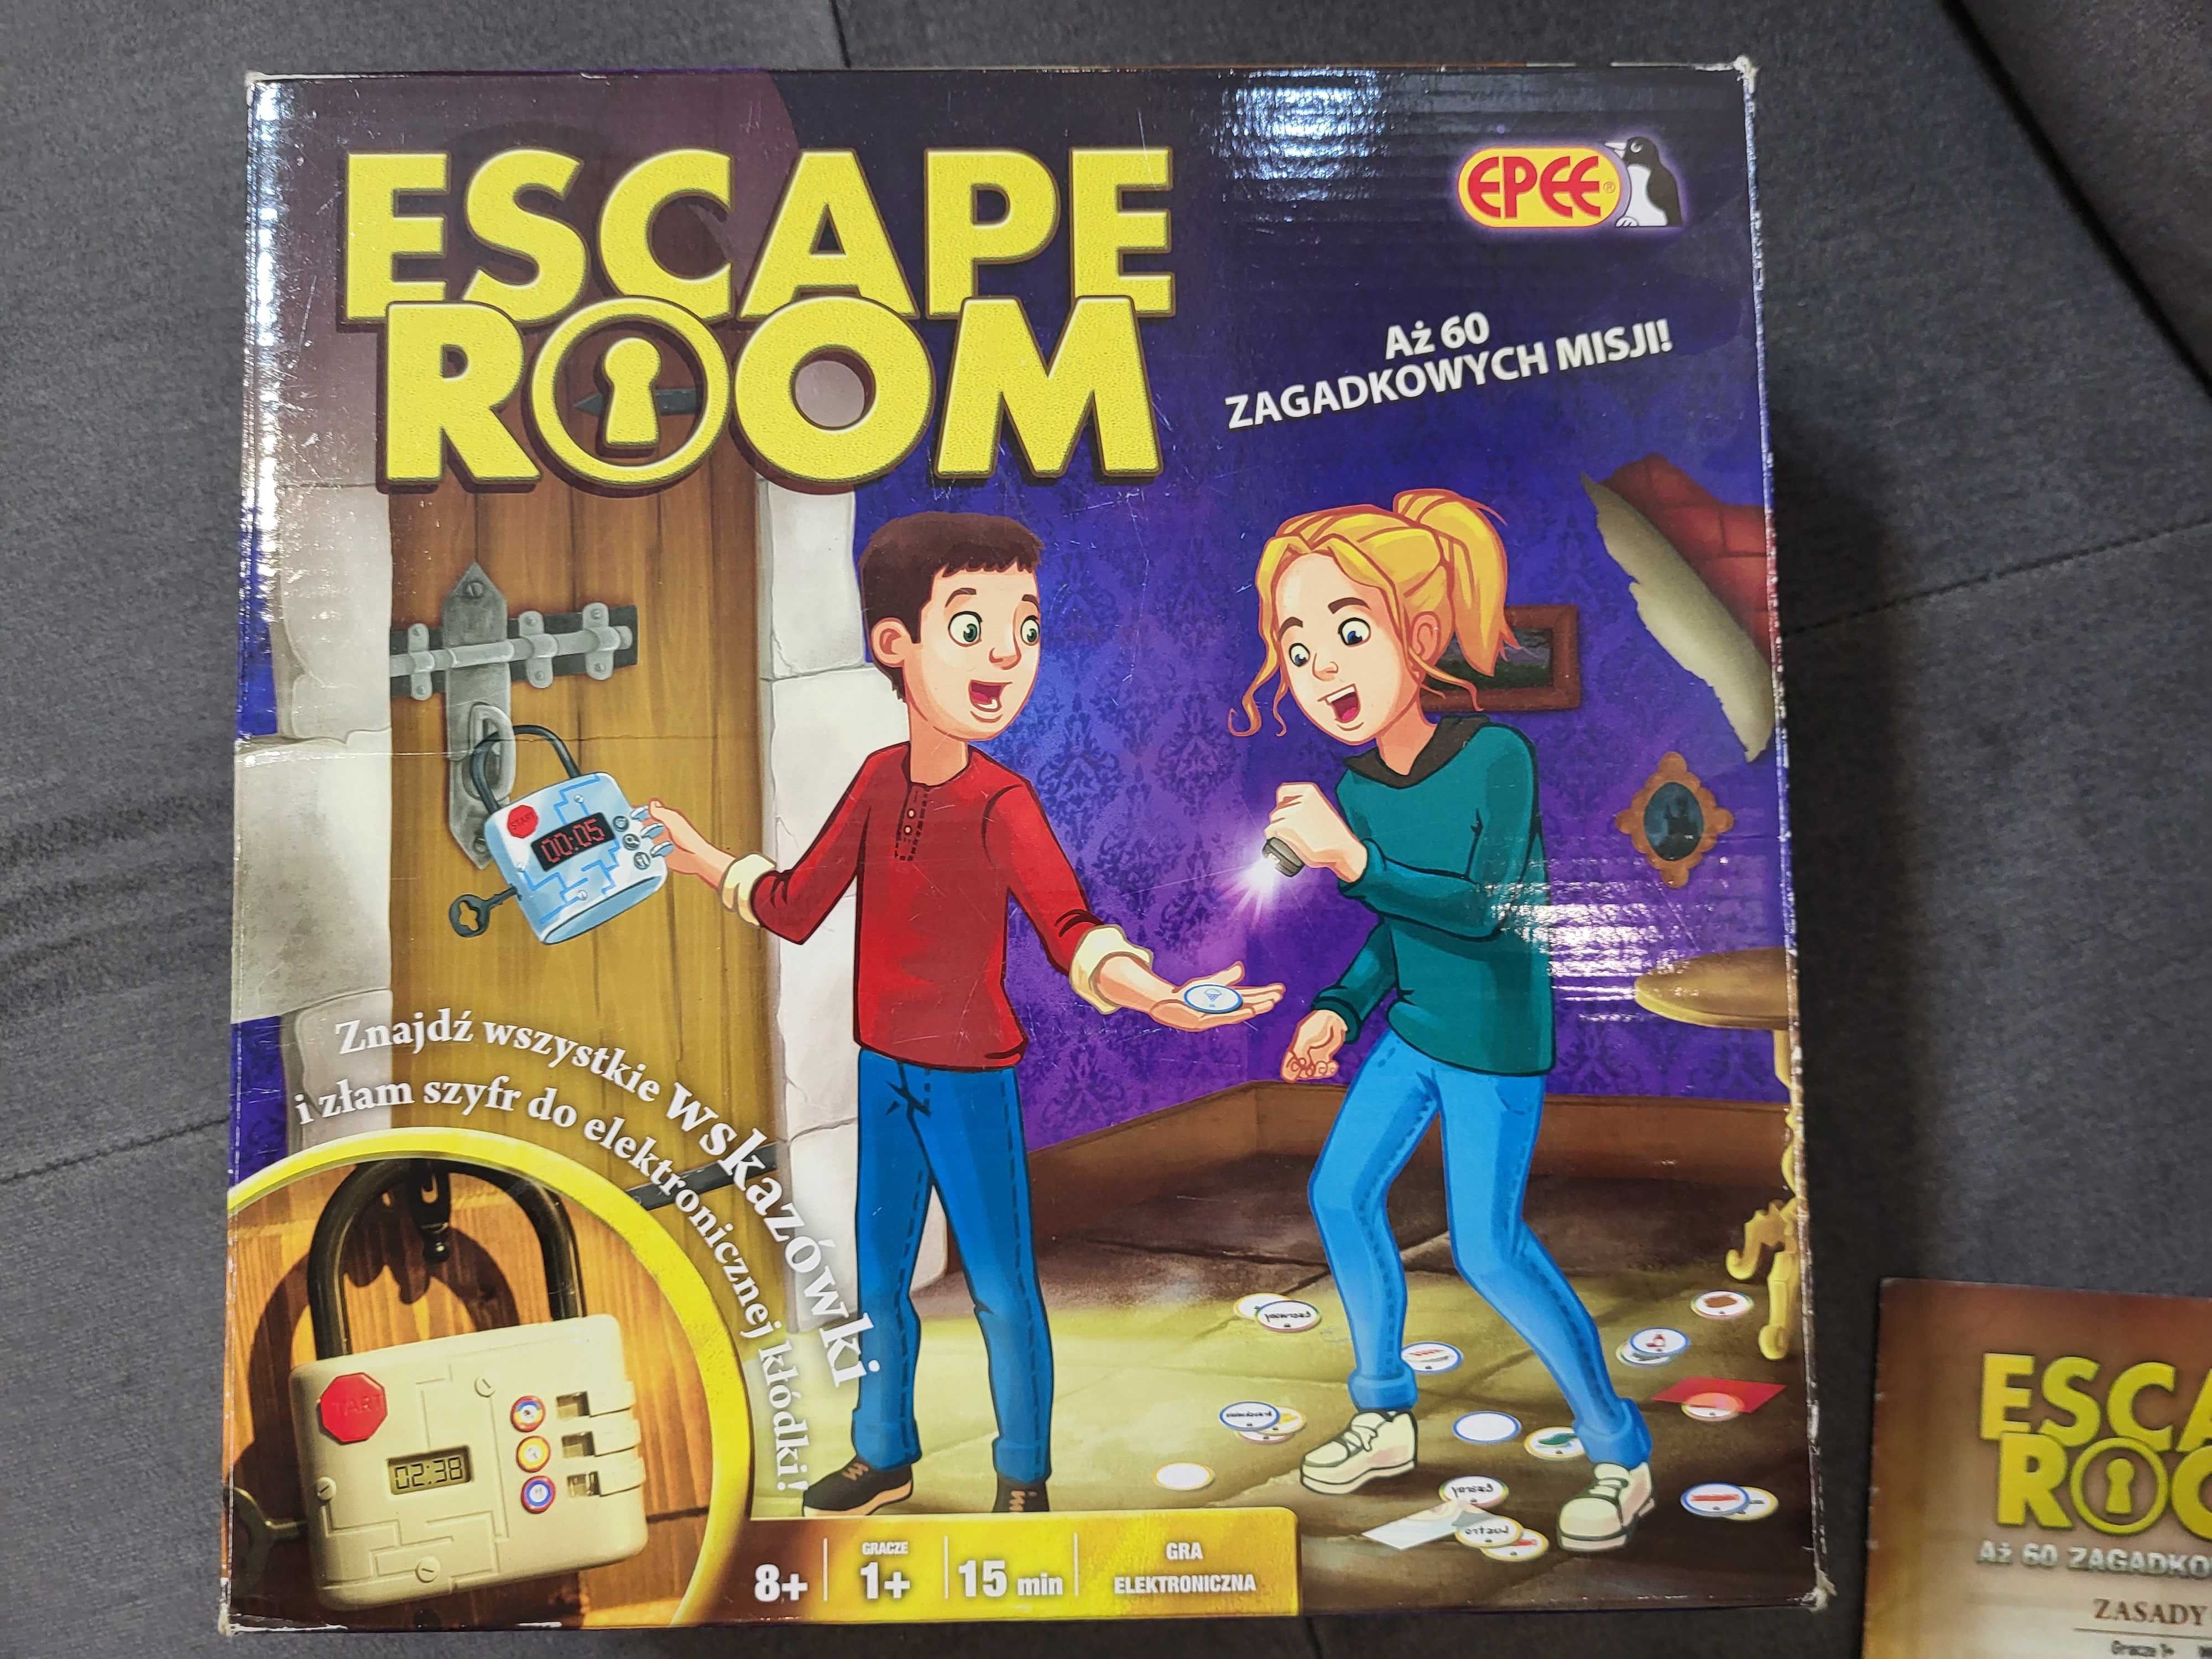 Escape room Epee gra familijna 60 zagadkowych misji